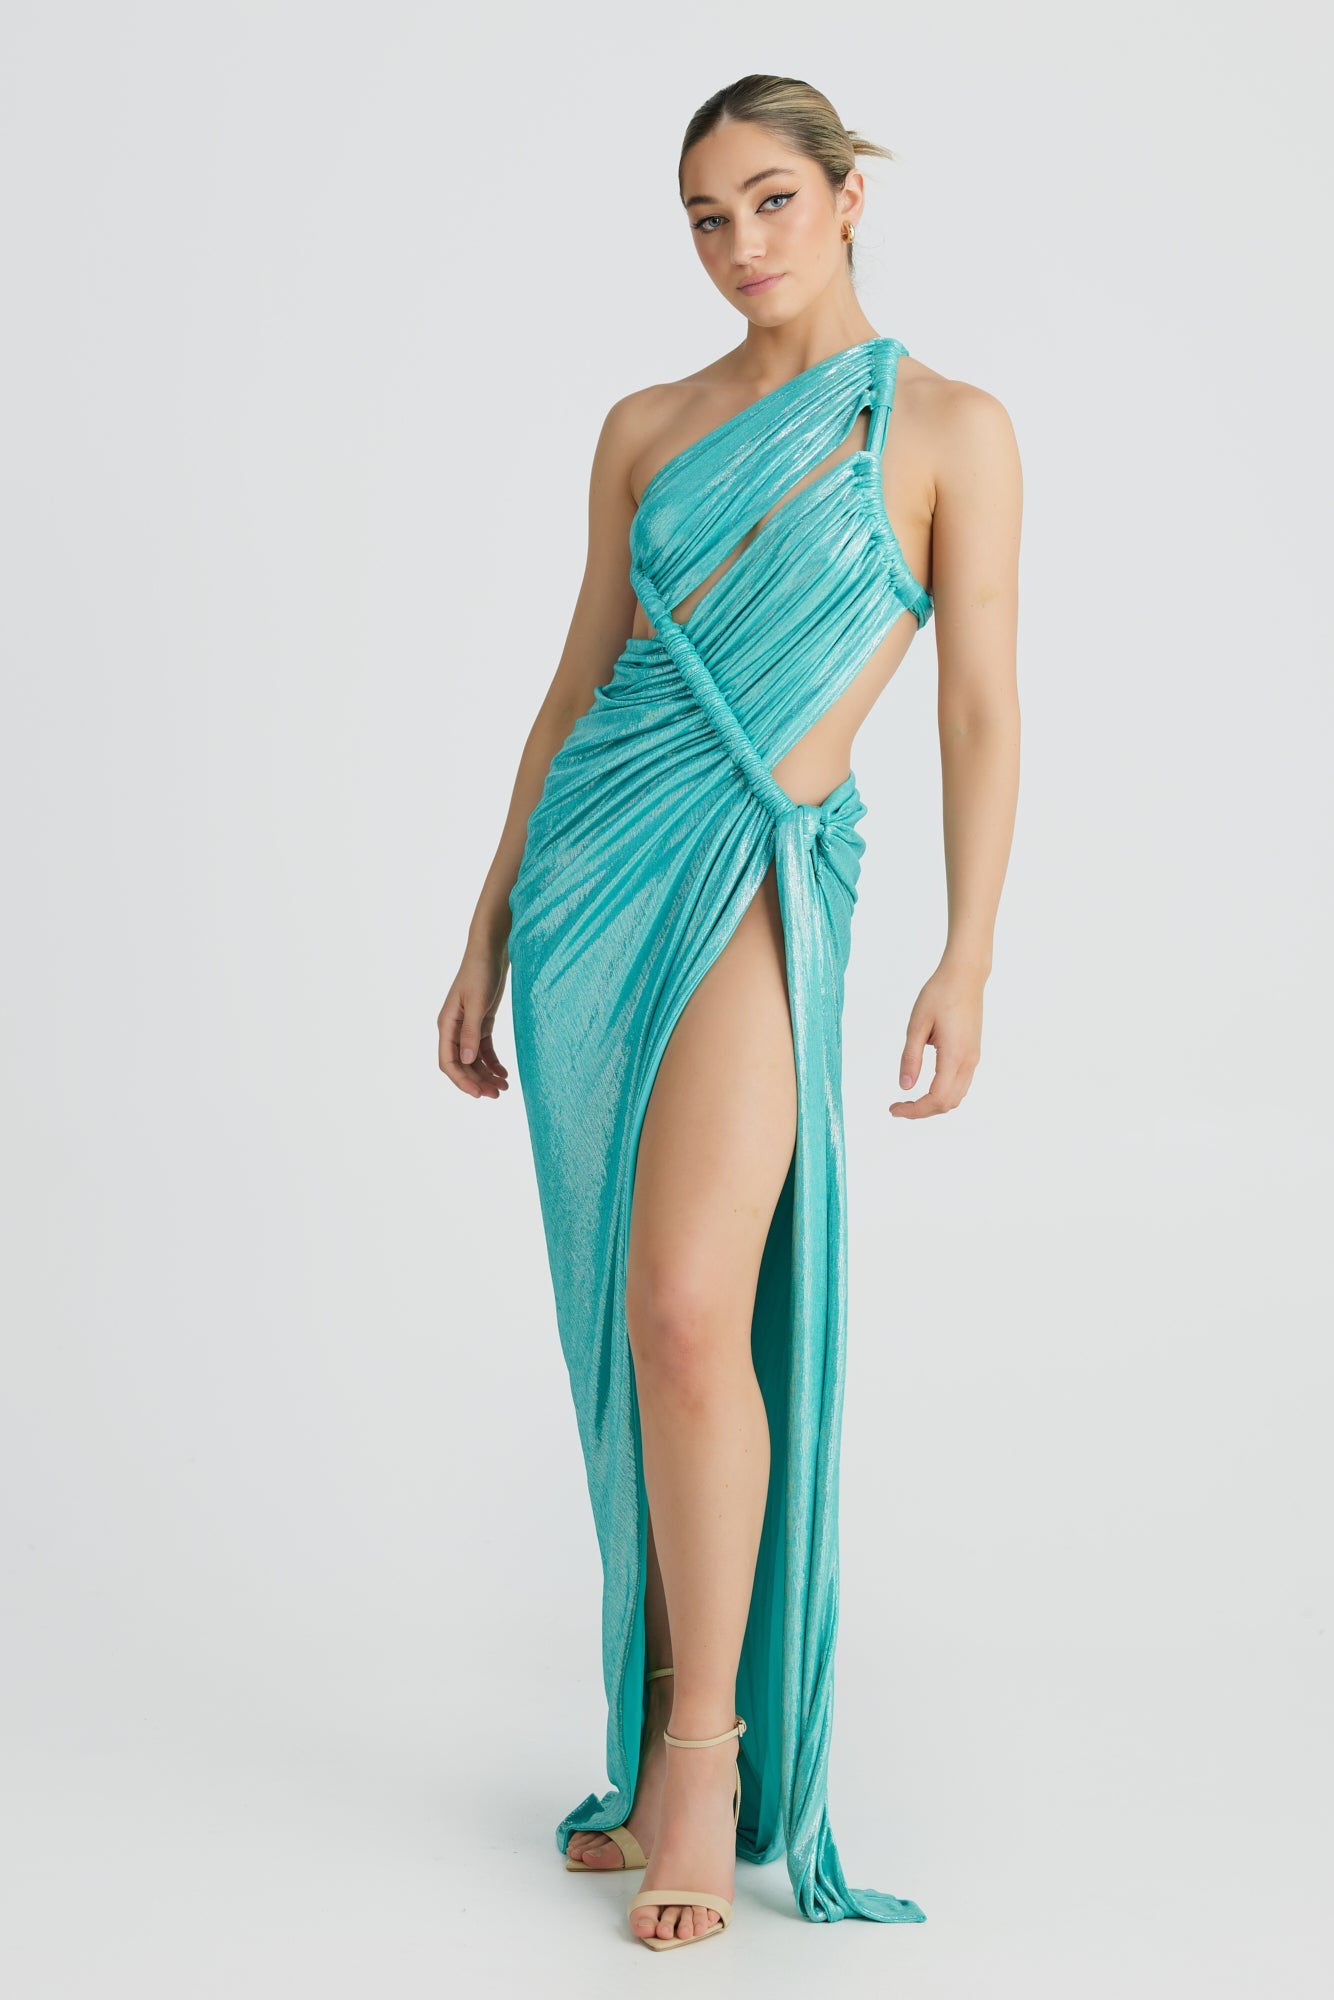 MÉLANI The Label APHRODITE Aqua Metallic One Shoulder Formal Dress